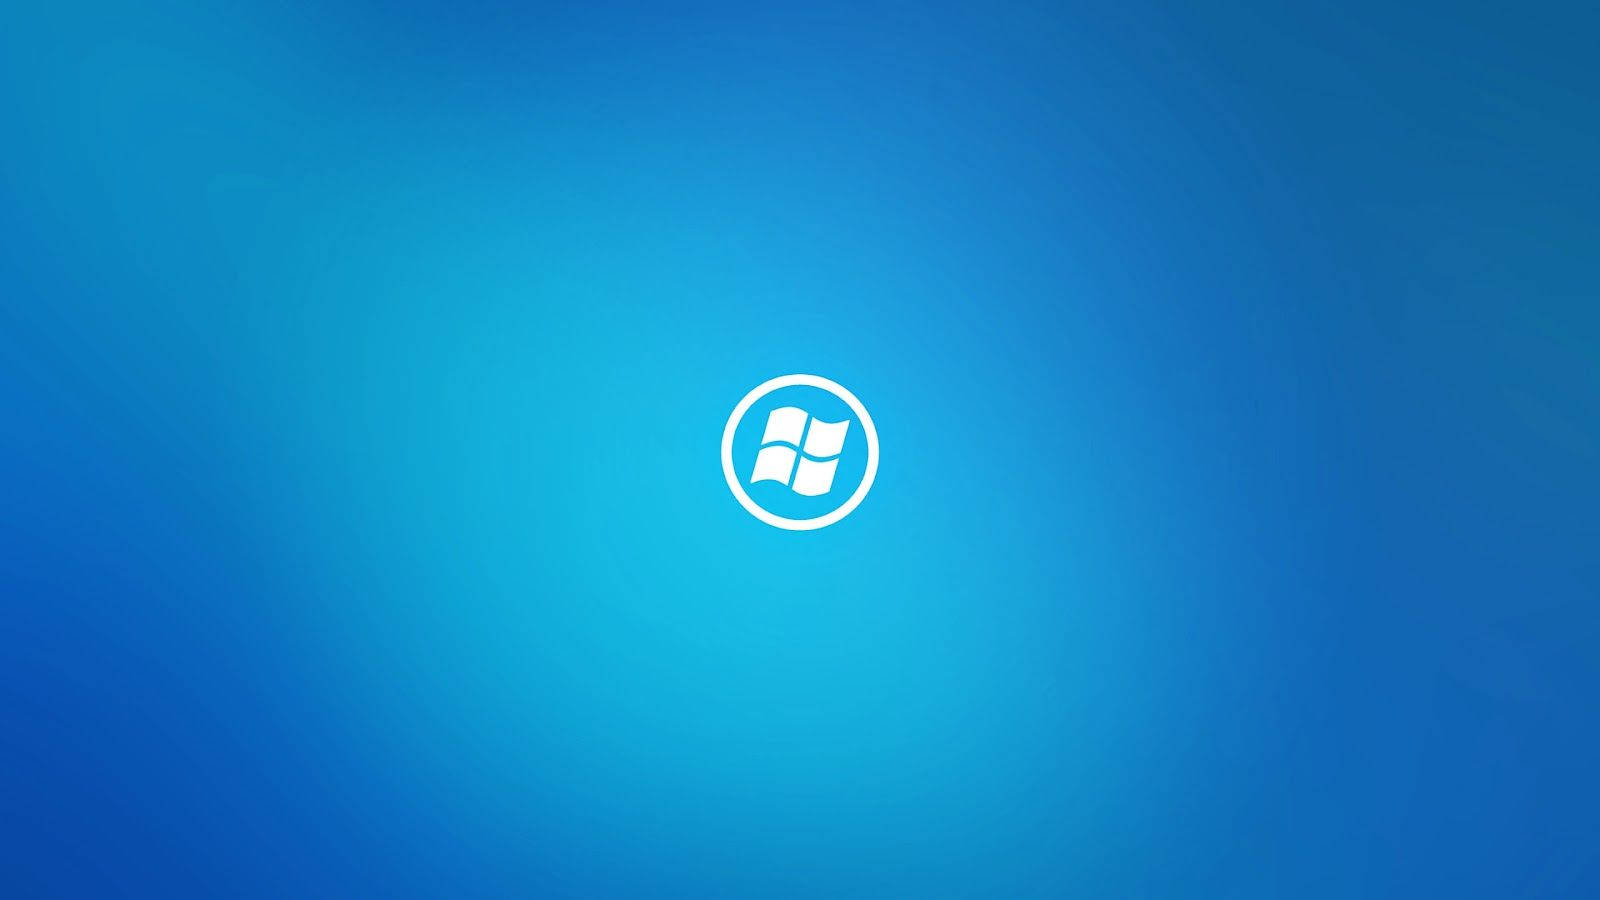 Windows 10 Hd Circle Logo Background